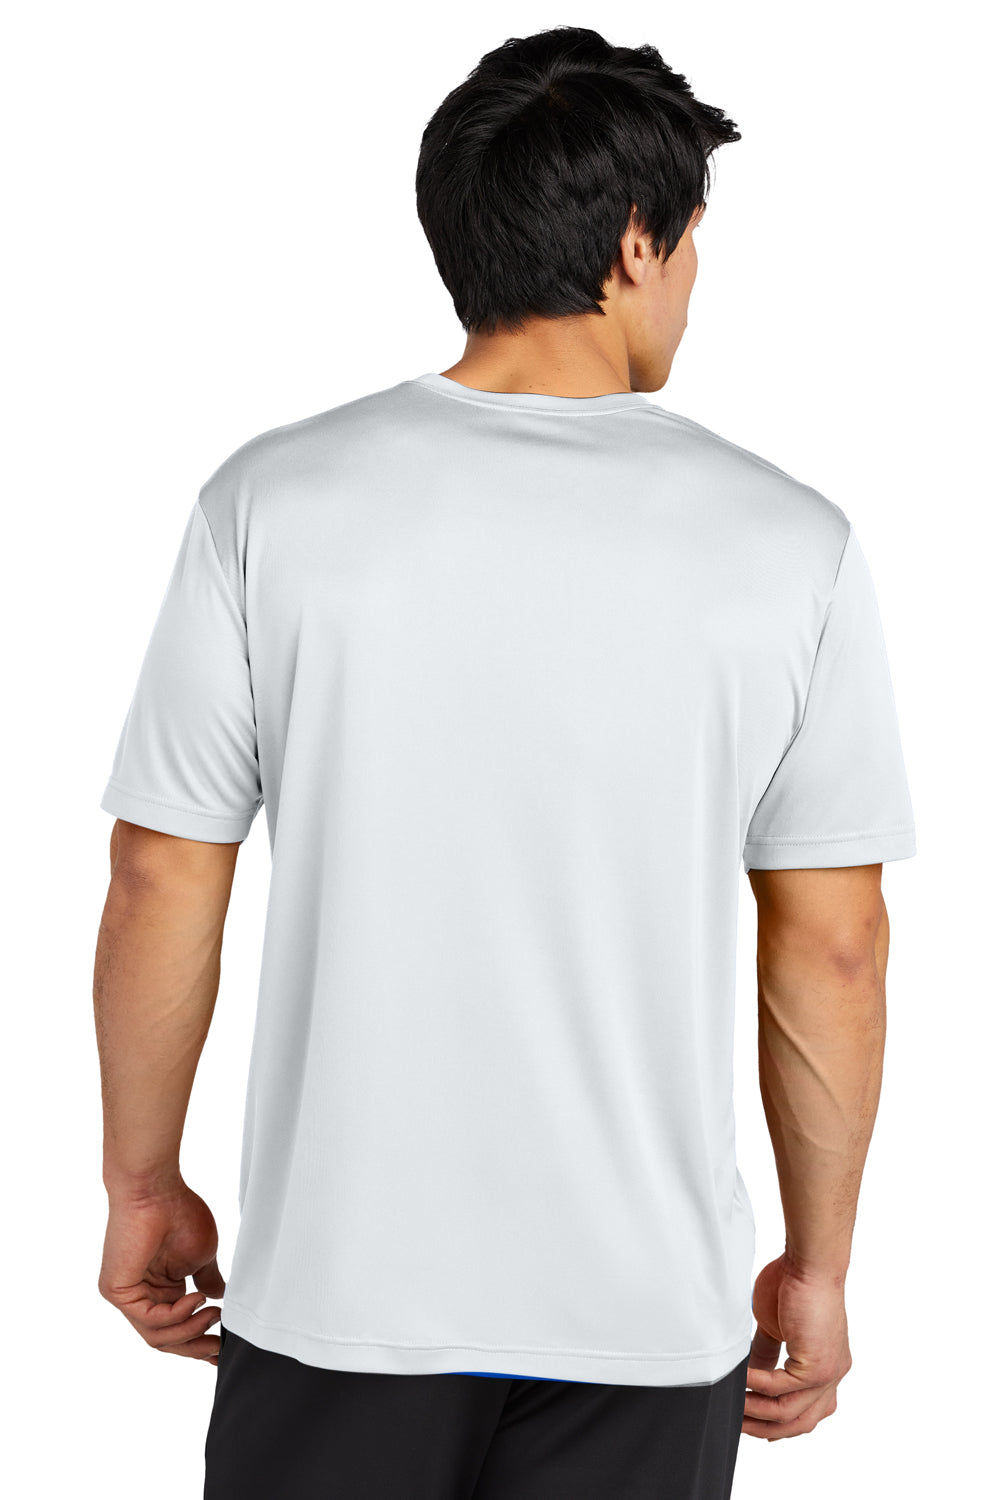 Sport-Tek ST720 Re-Compete PosiCharge Short Sleeve Crewneck T-Shirt White Back